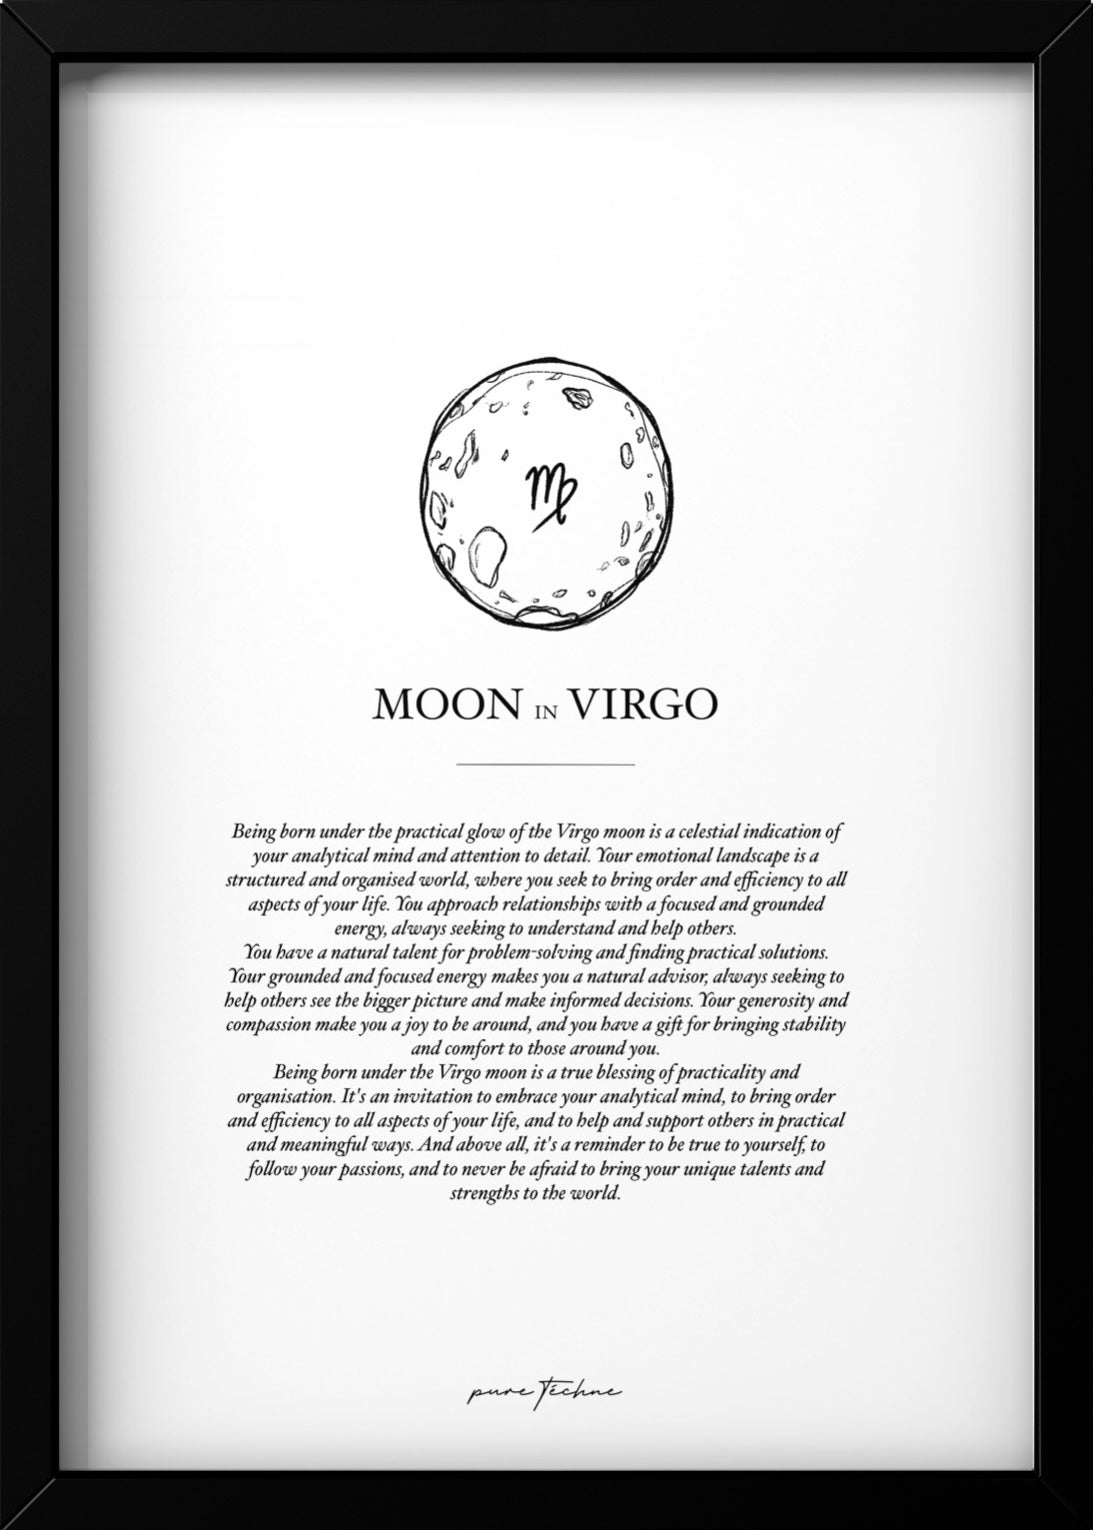 The Virgo Moon